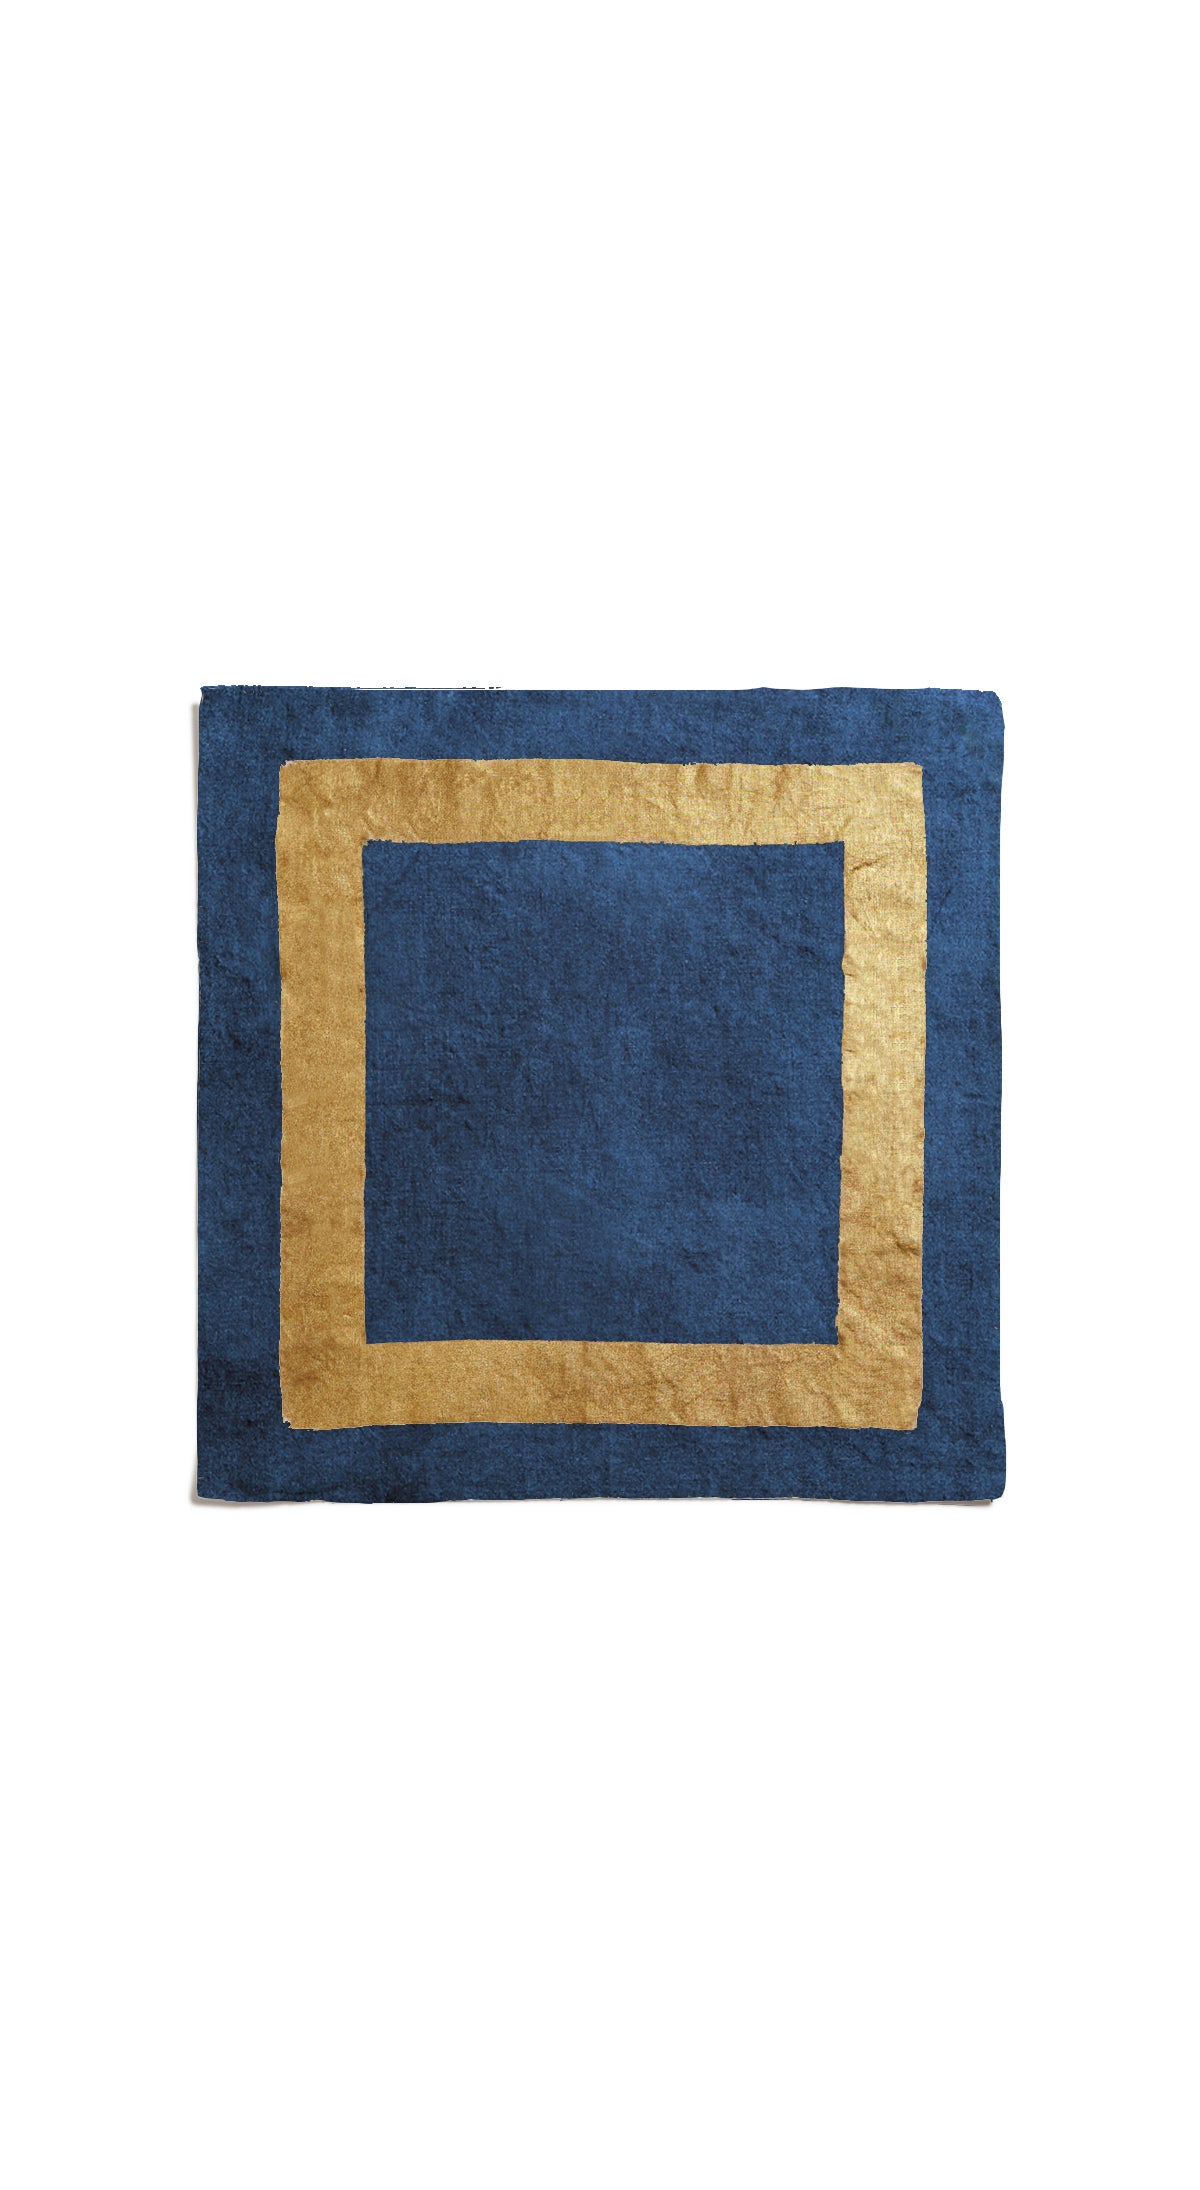 Full Field Cornice Linen Napkin in Midnight Blue & Gold, 50x50cm